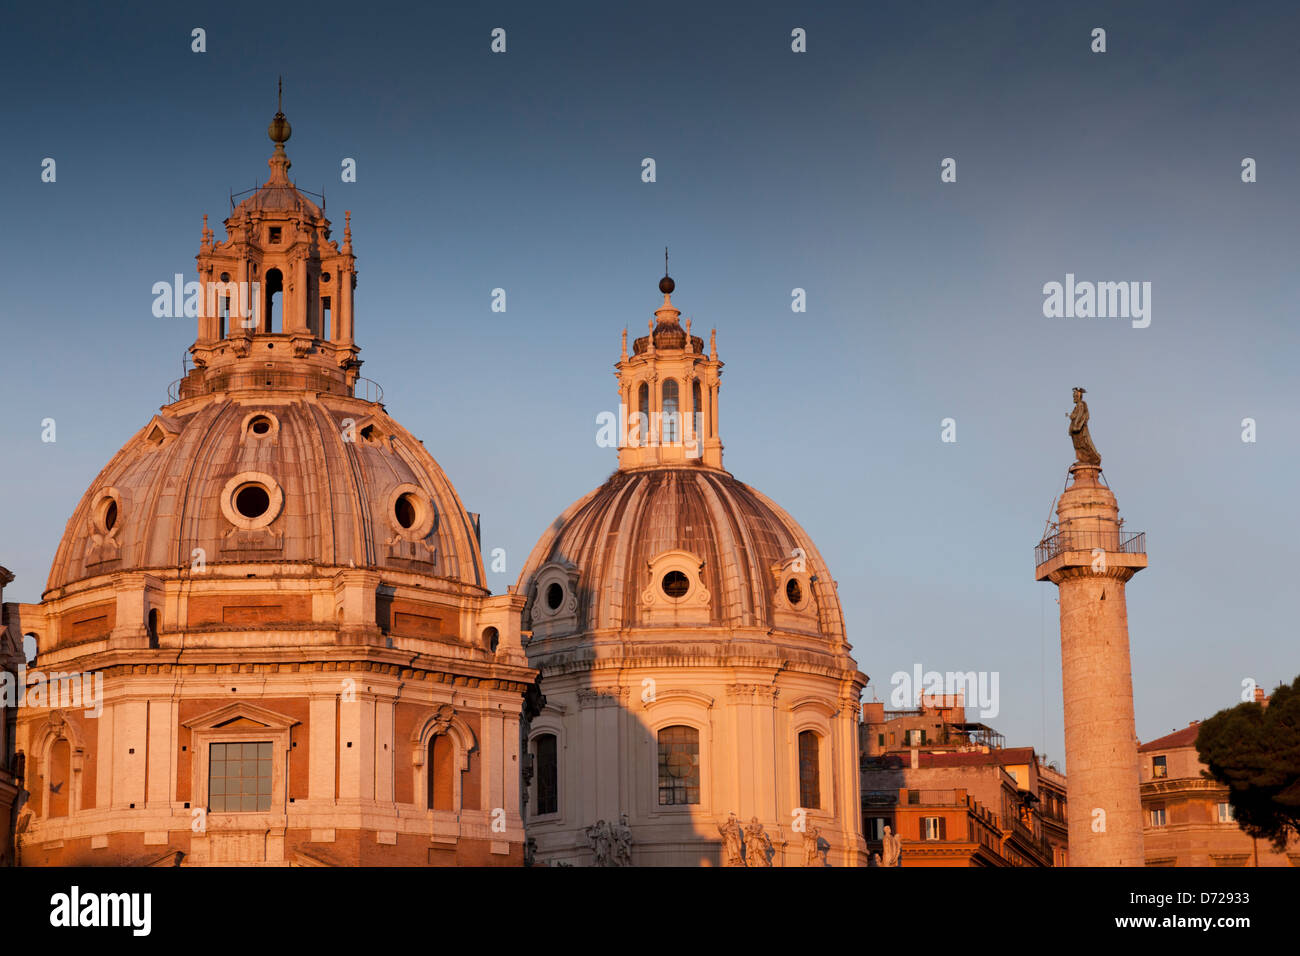 Domes of the churches of Santa Maria di Loreto and Sacro Nome di Maria next toTrajan's Column Stock Photo